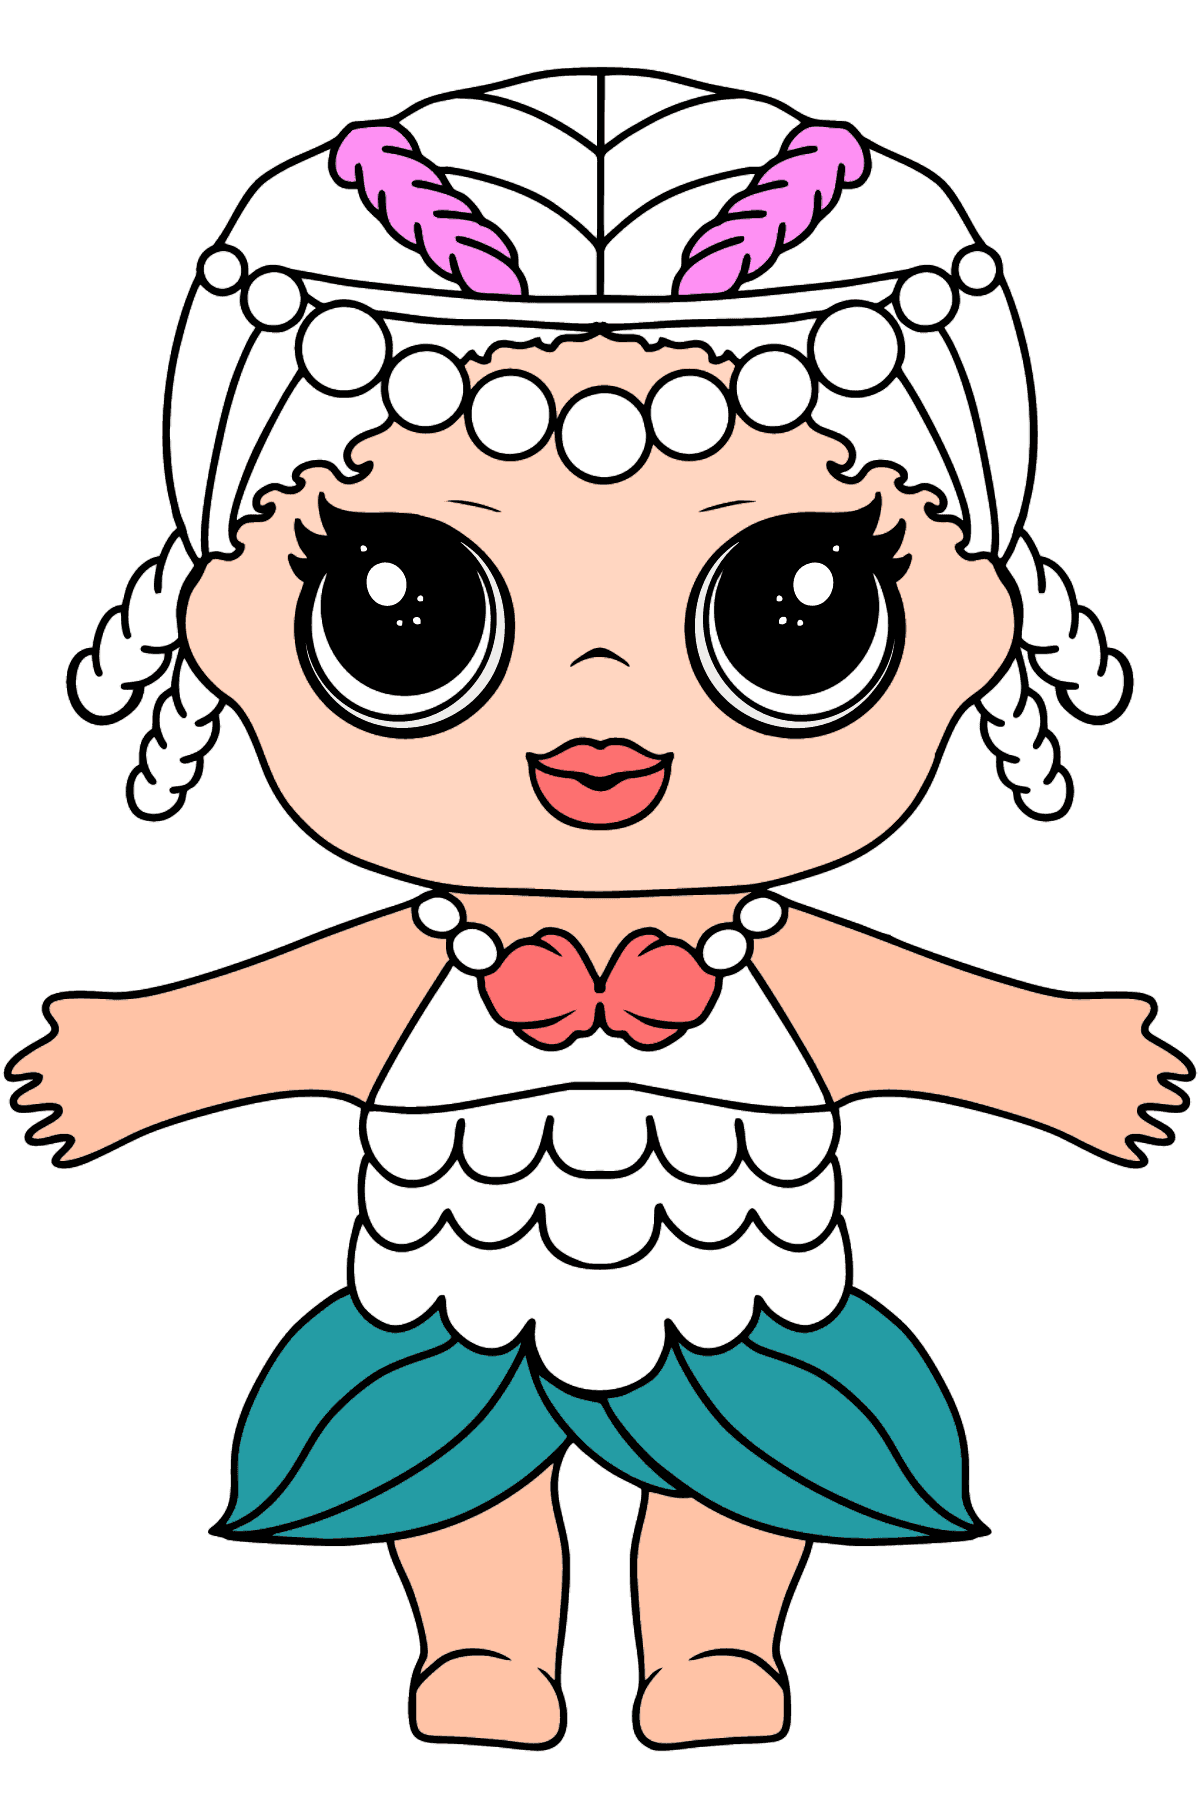 LOL Раскраска Кукла Merbaby (Русалочка) - Картинки для Детей